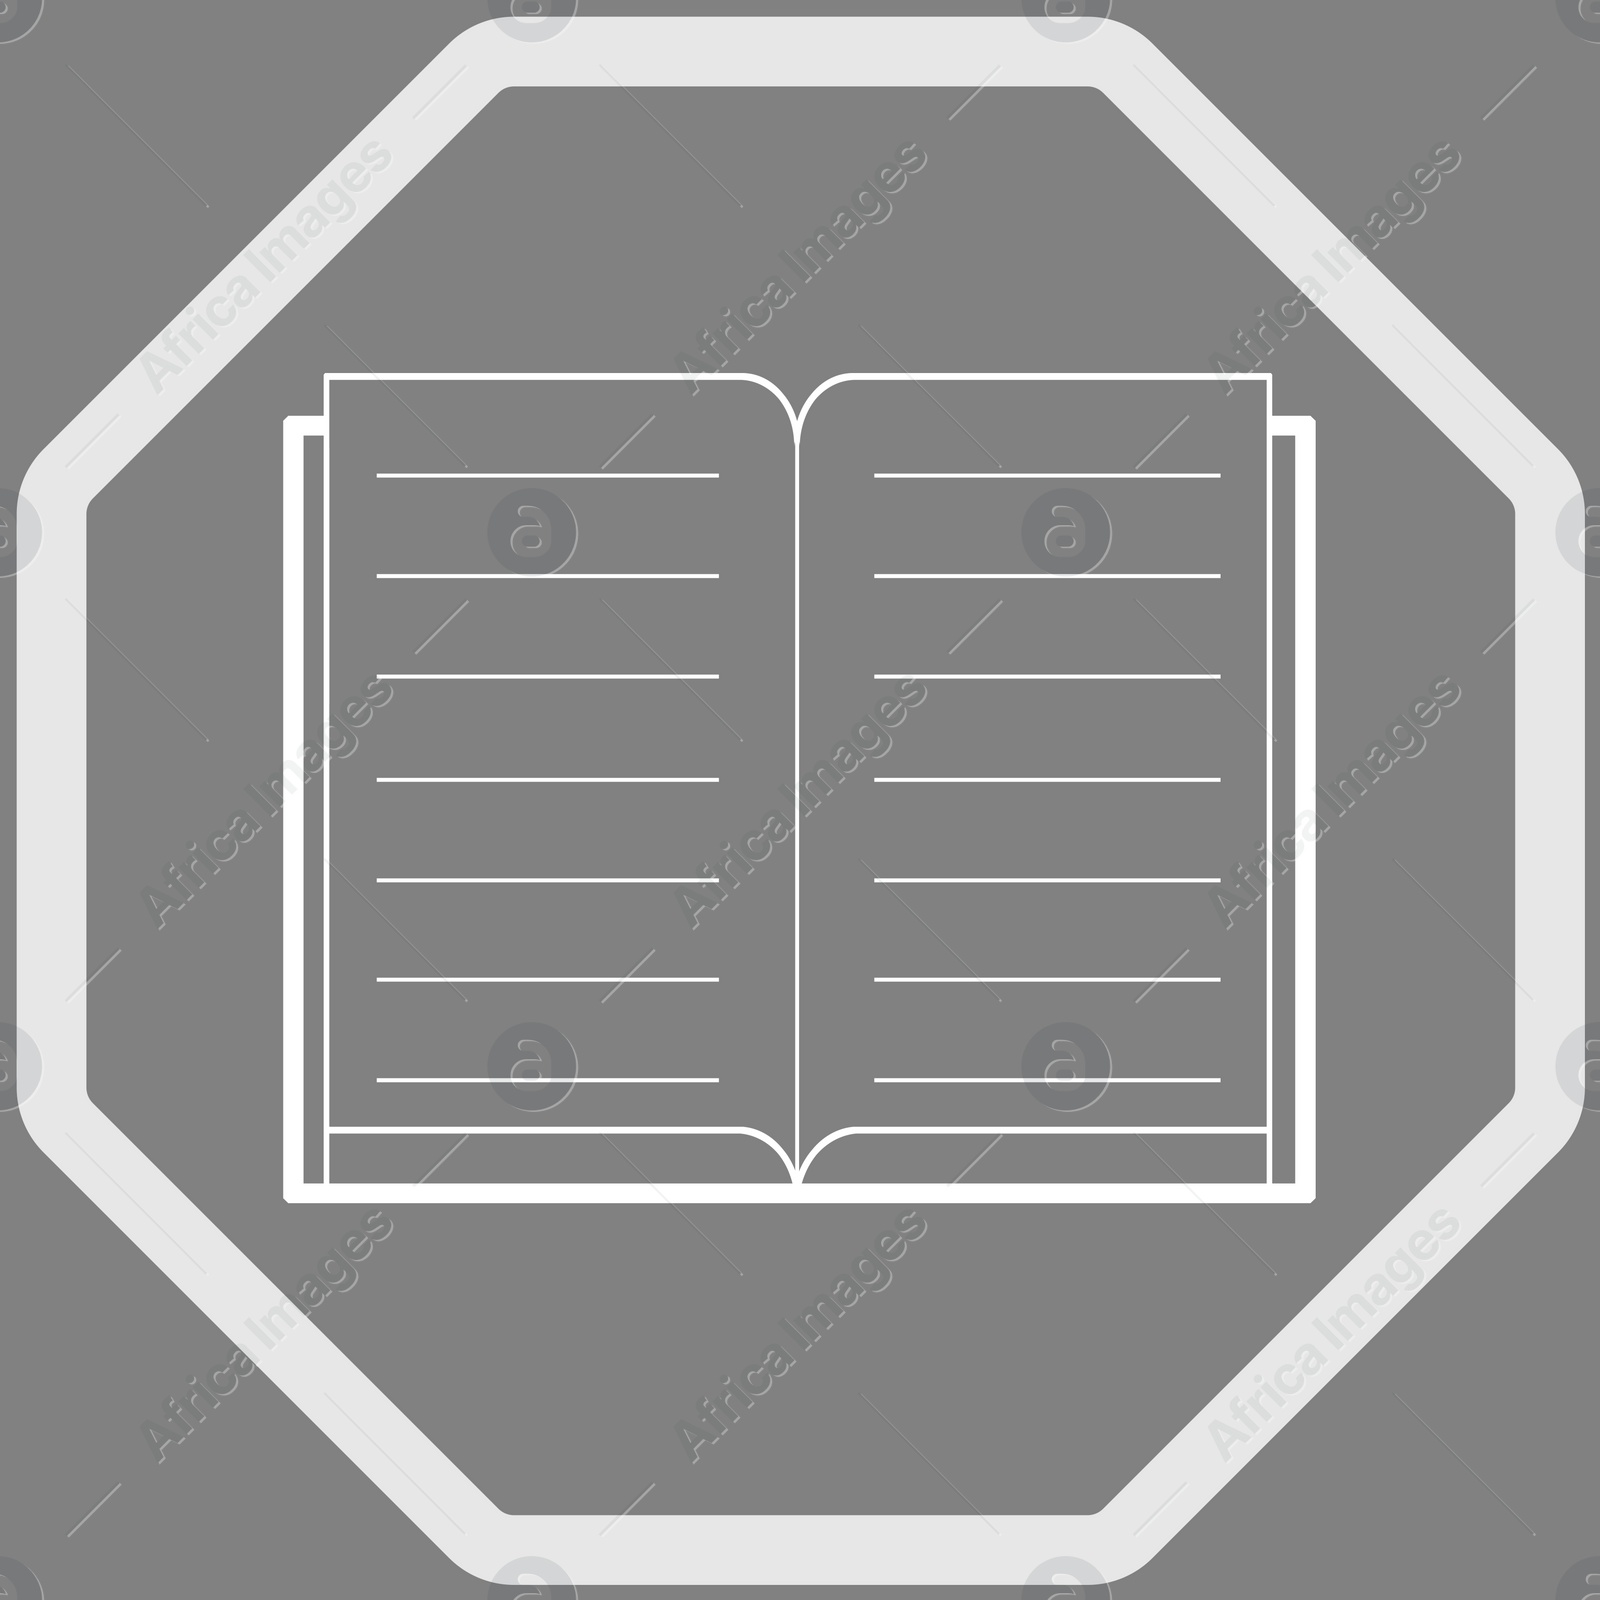 Image of Open book in frame, illustration on grey background